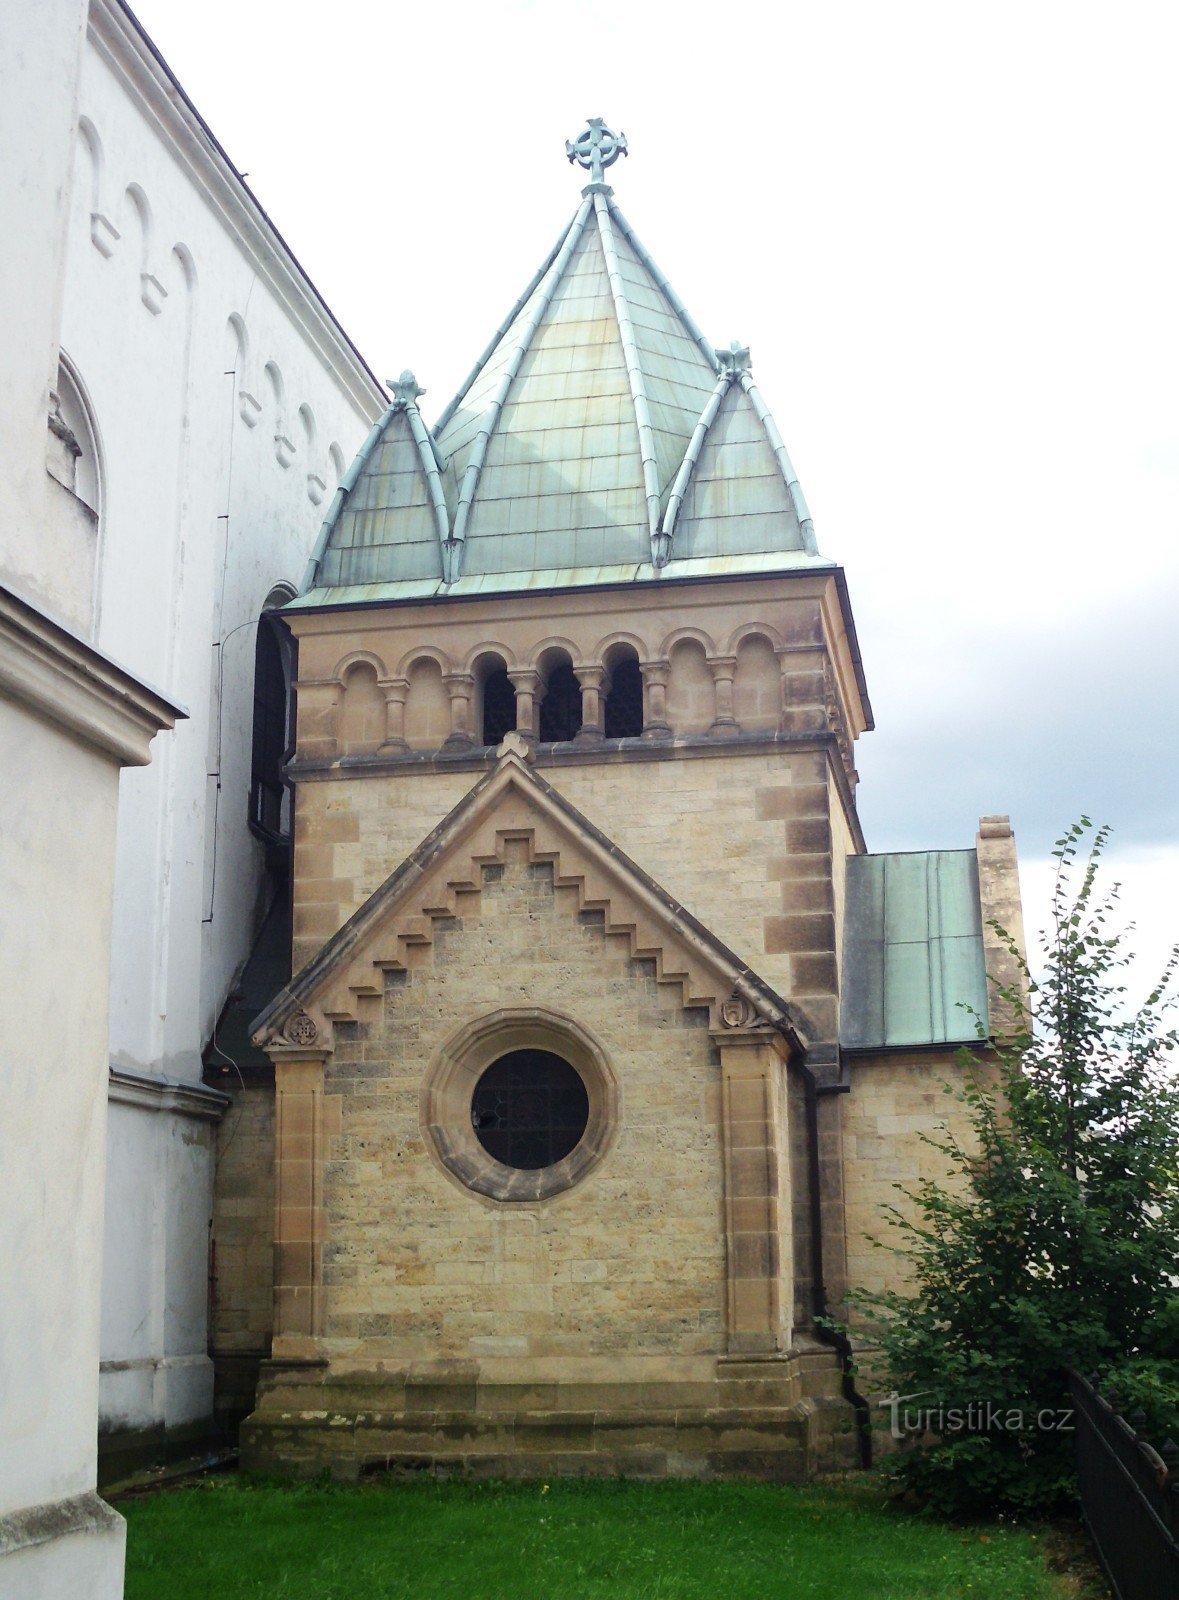 Čakovice (Prag) - Kirche St. Remigia